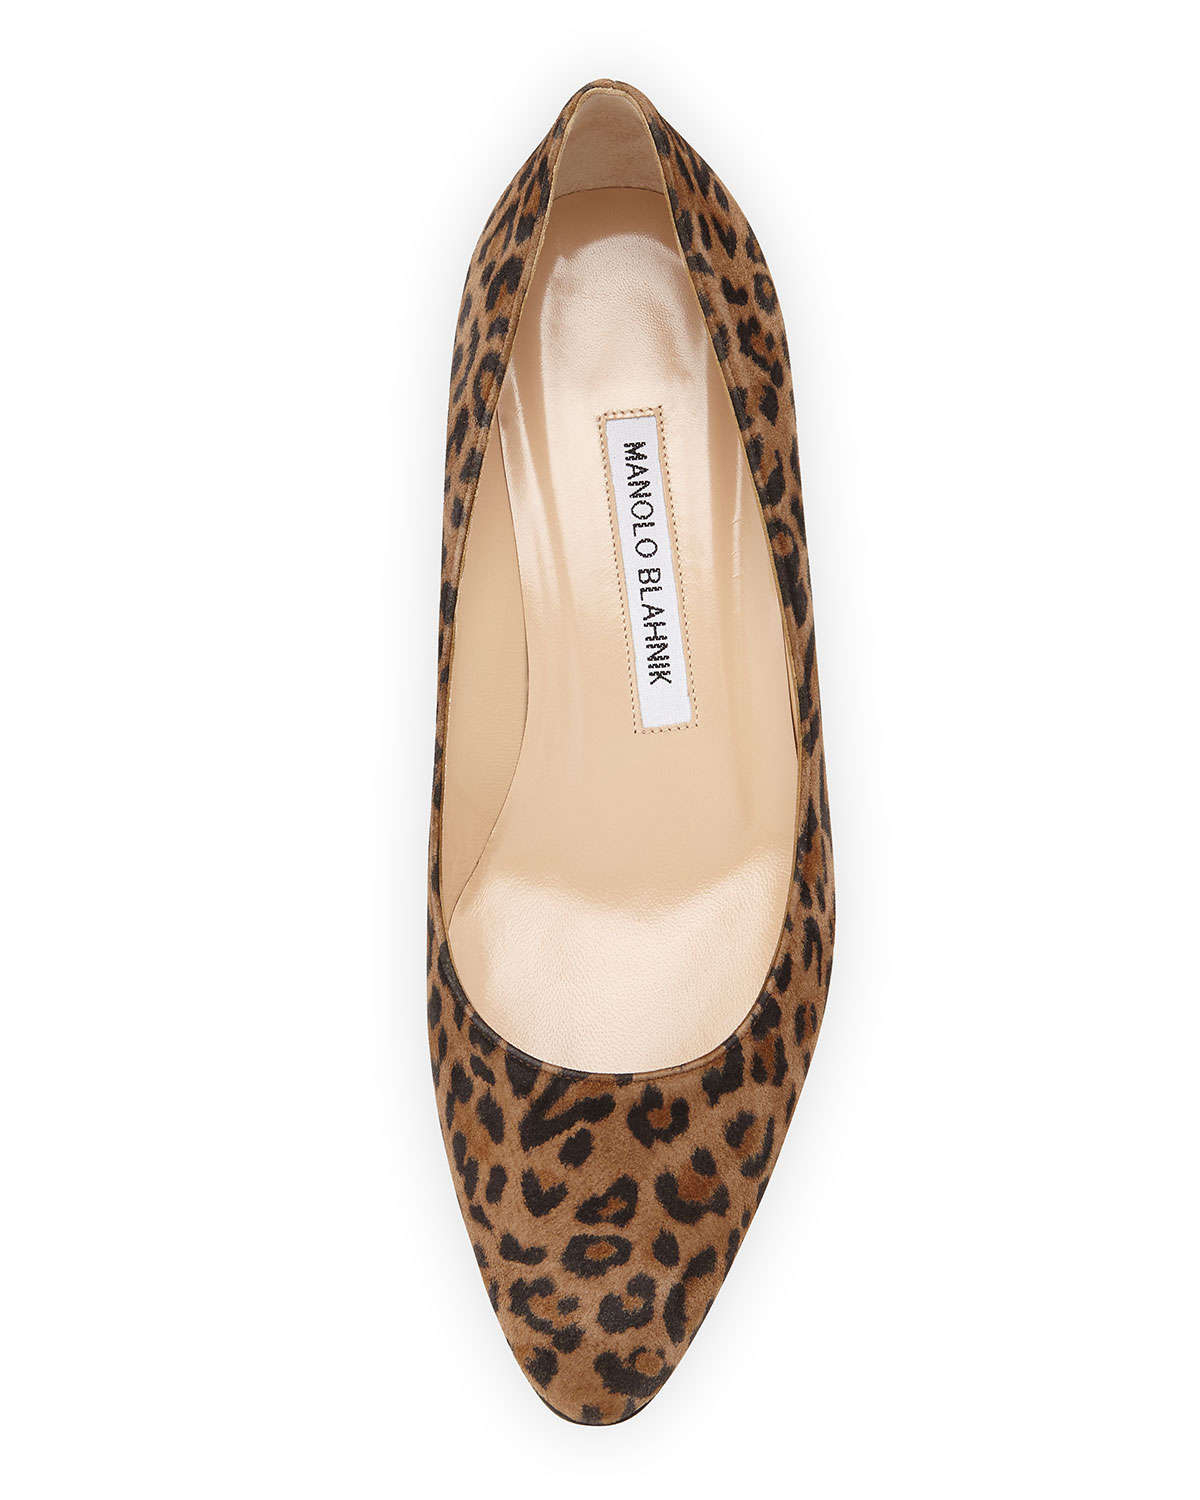 Manolo Blahnik Leopard Listony Printed Suede Block Heel Pump Animal Product 2 806454358 Normal 